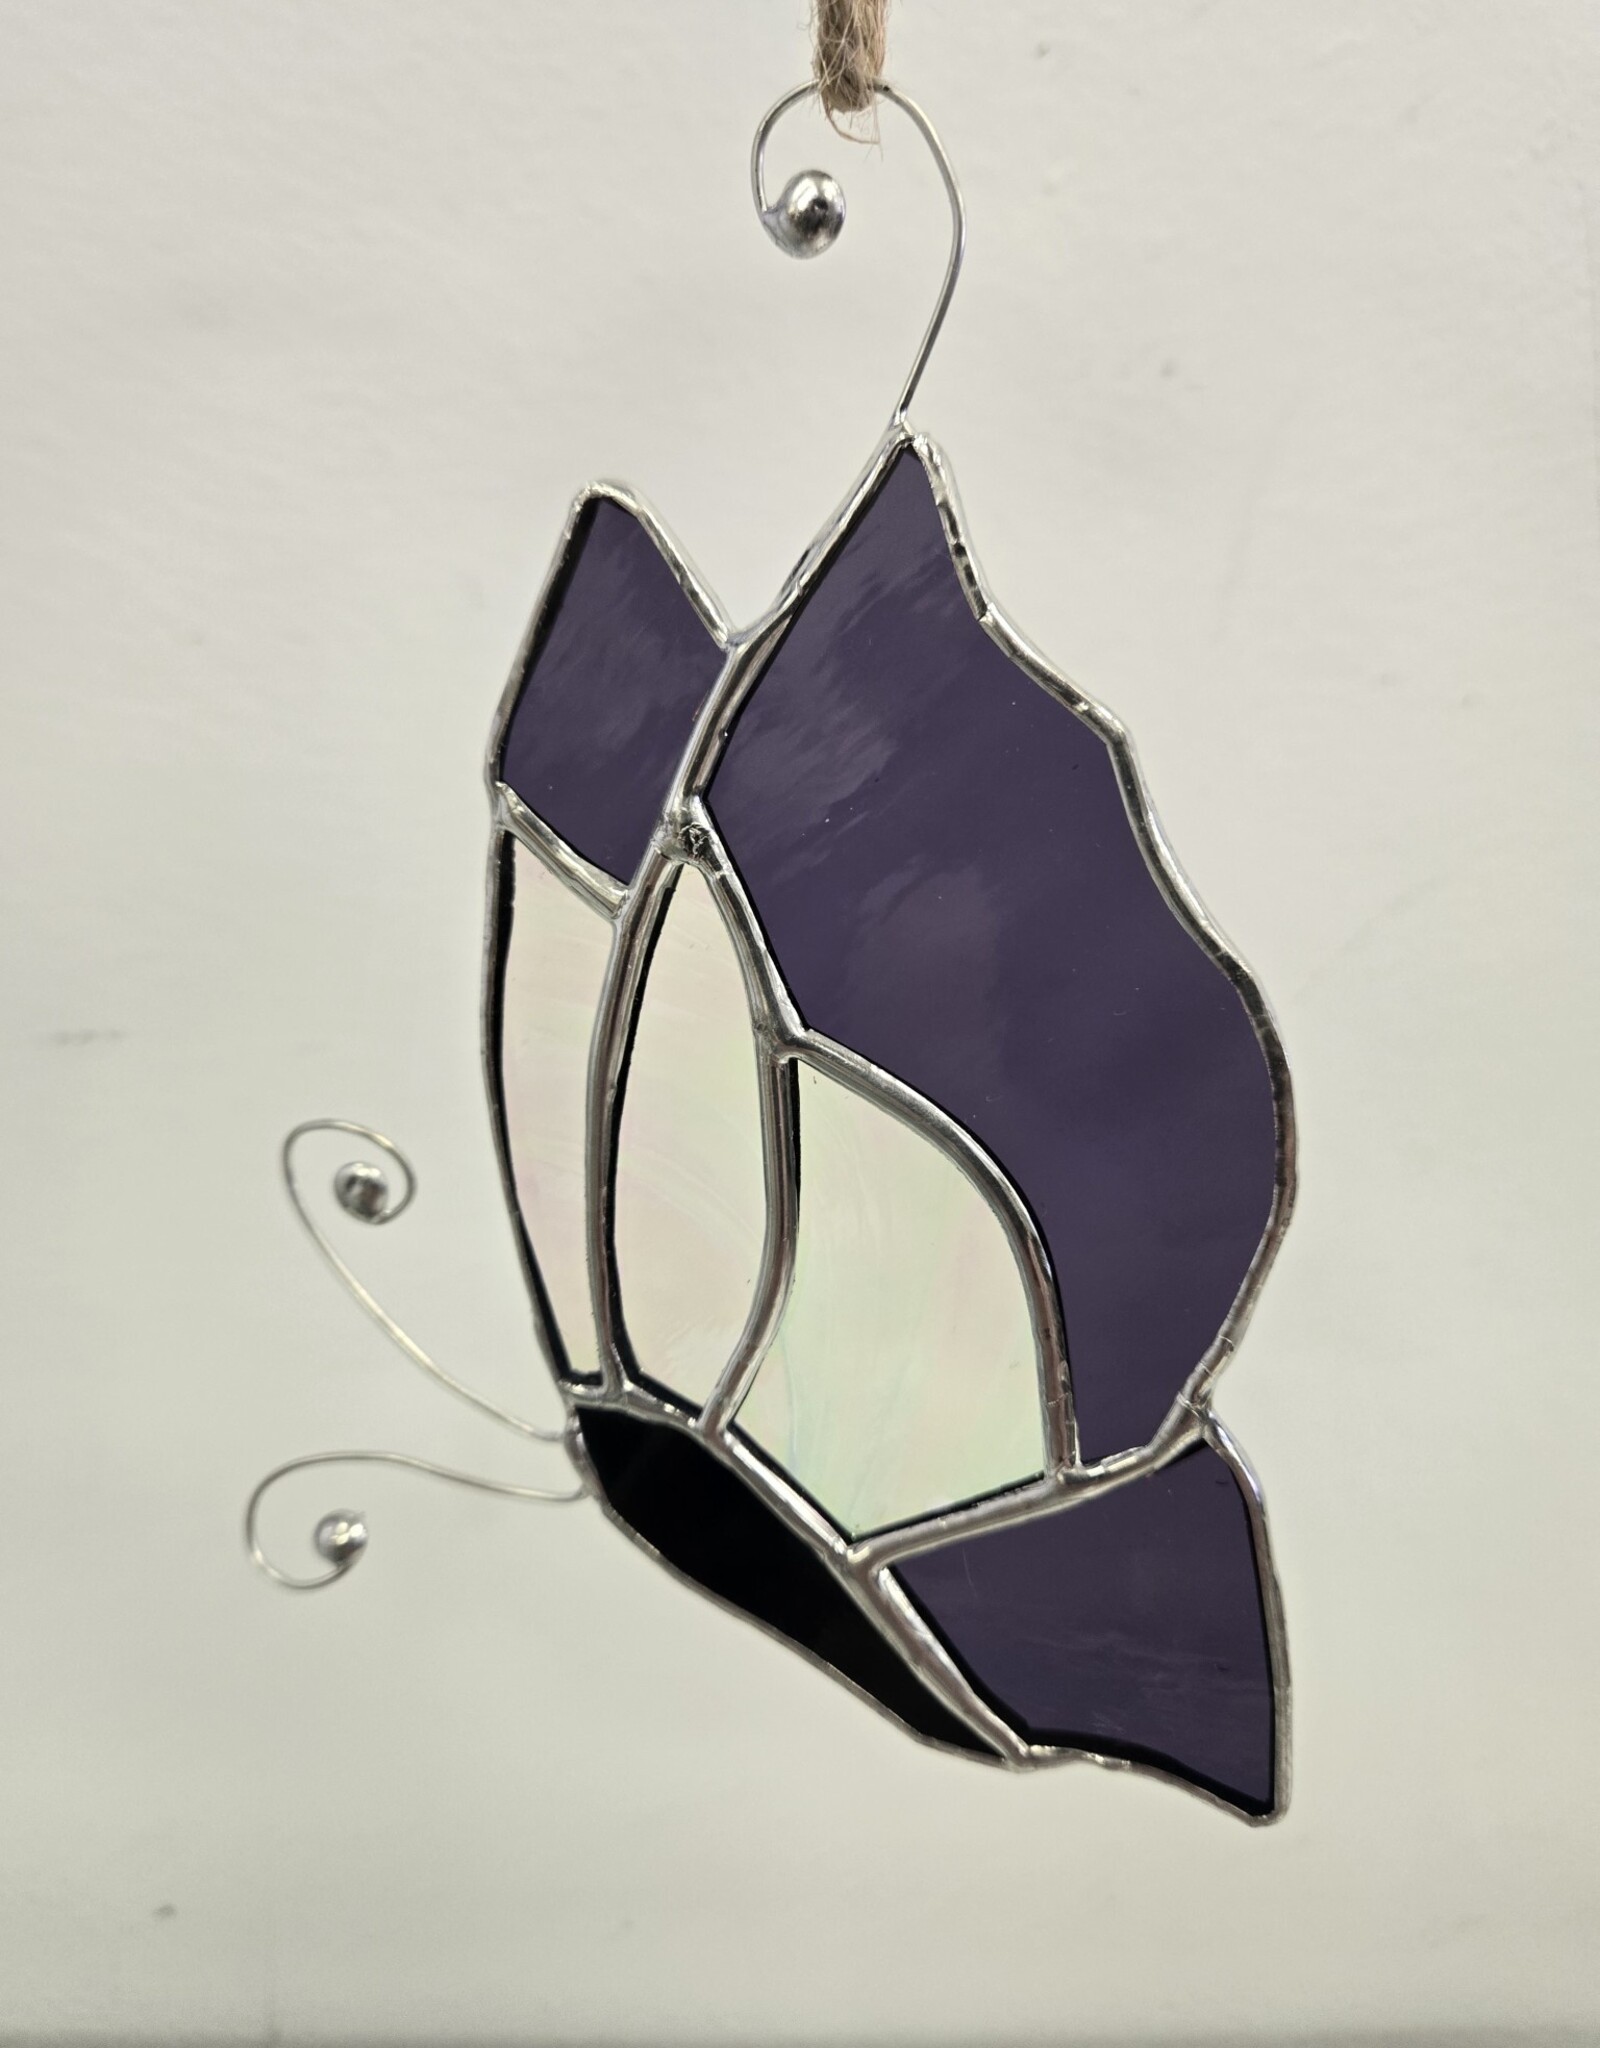 Stained Glass Butterfly Suncatcher - purple